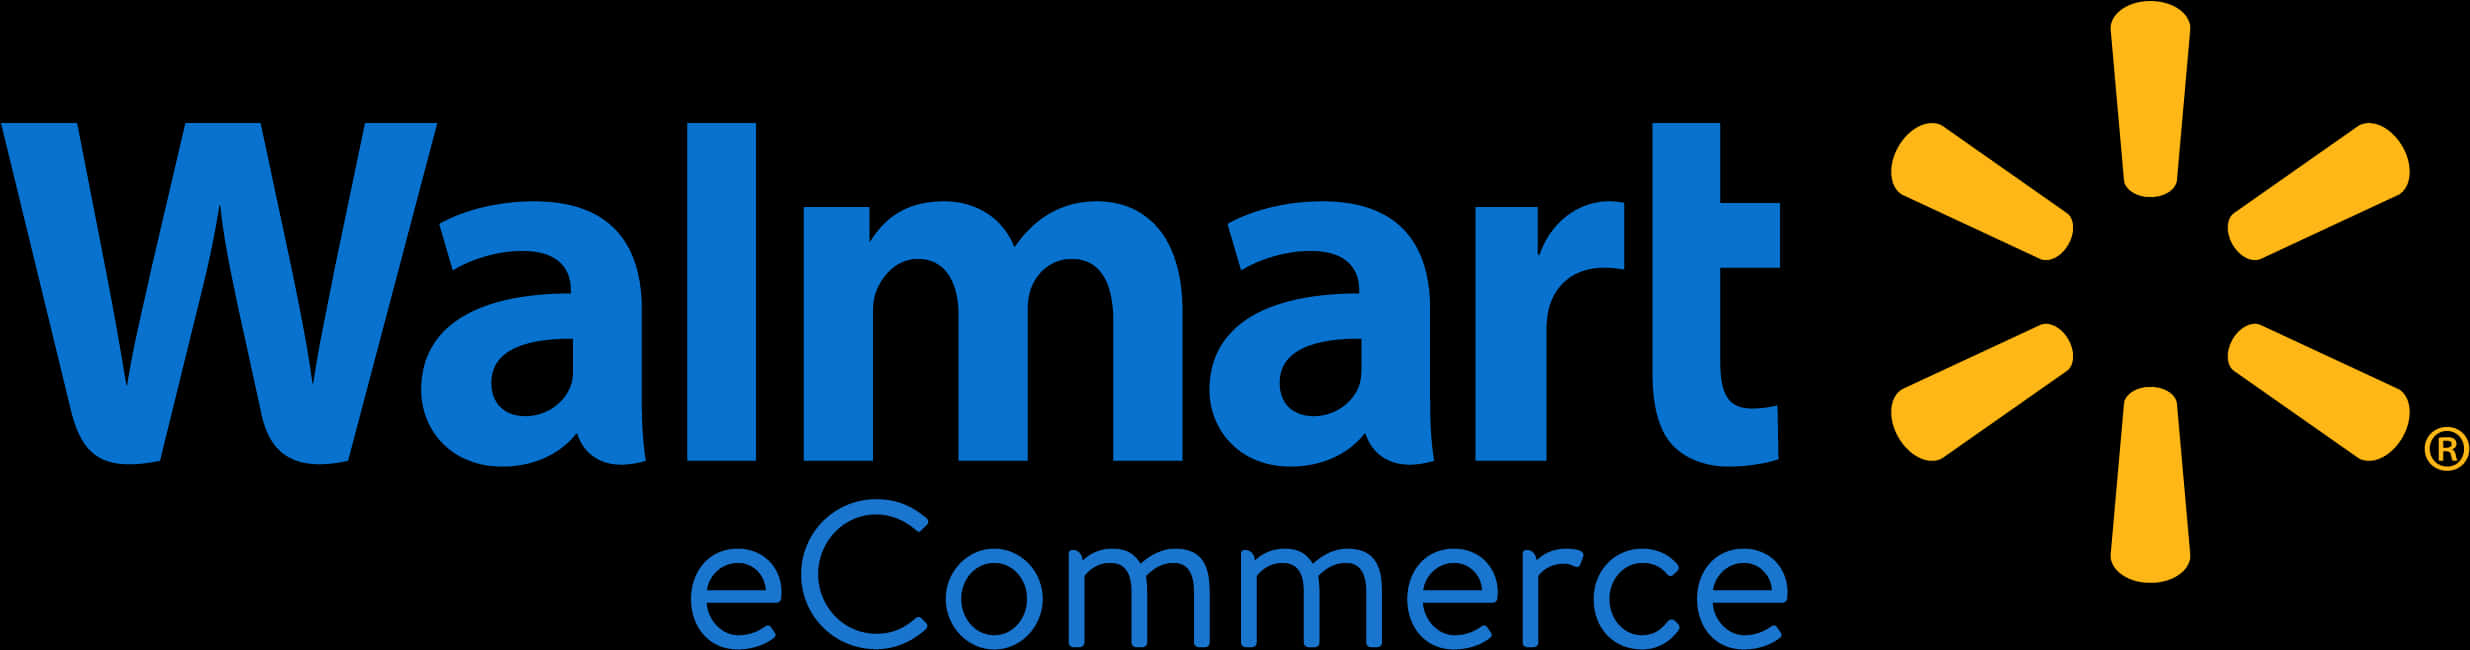 Walmarte Commerce Logo PNG